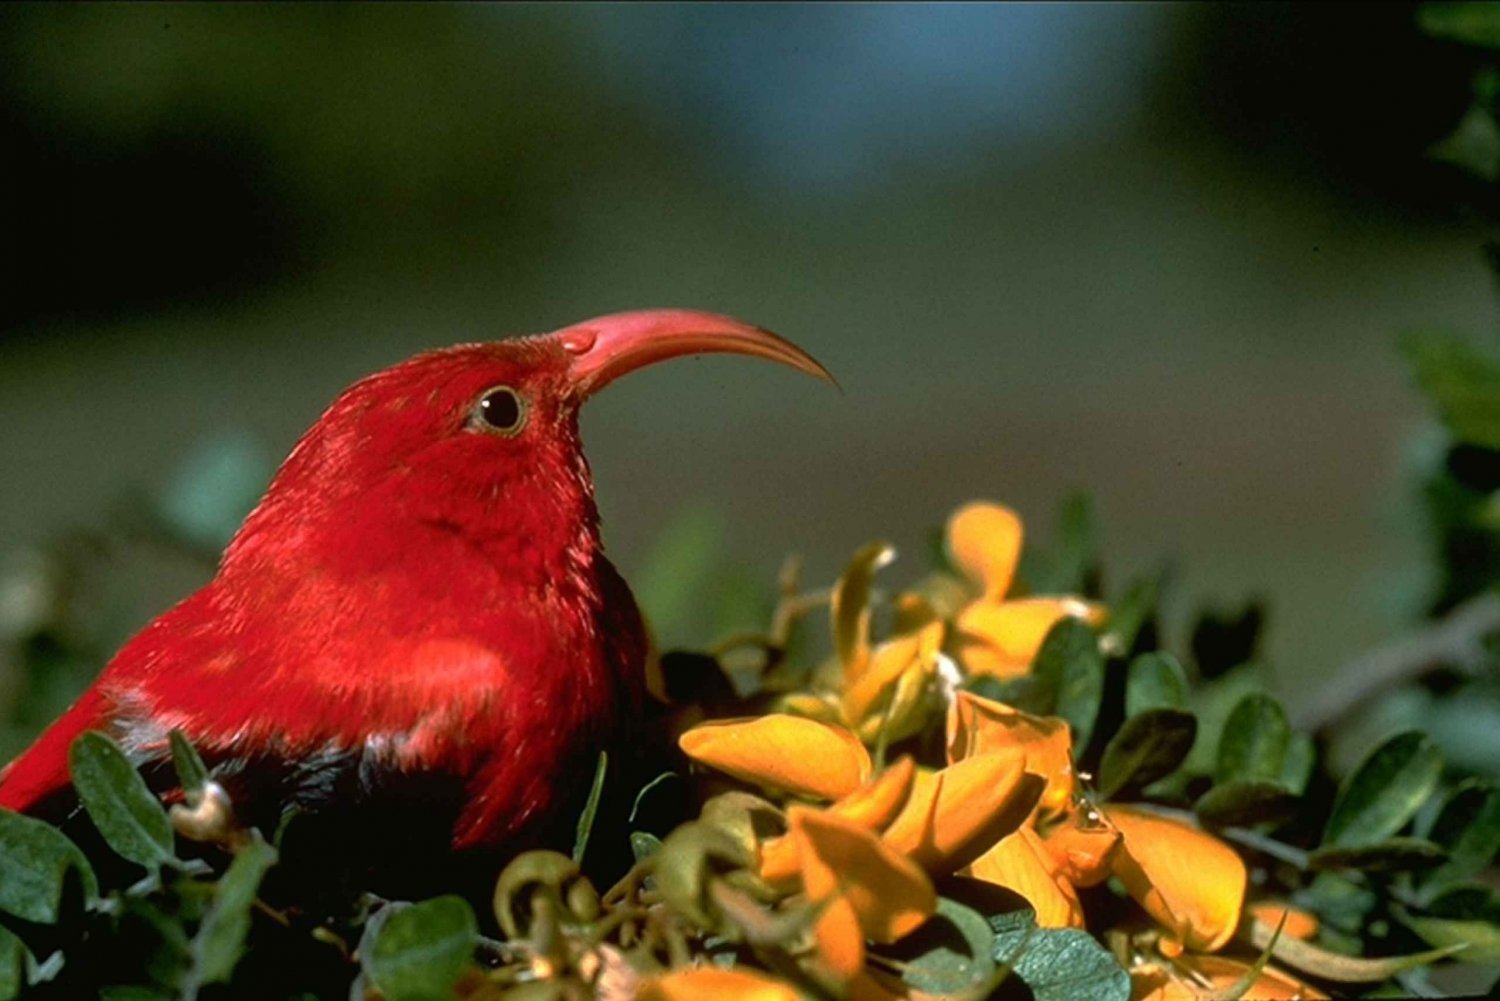 Big Island: Innfødt fugletitting og fottur